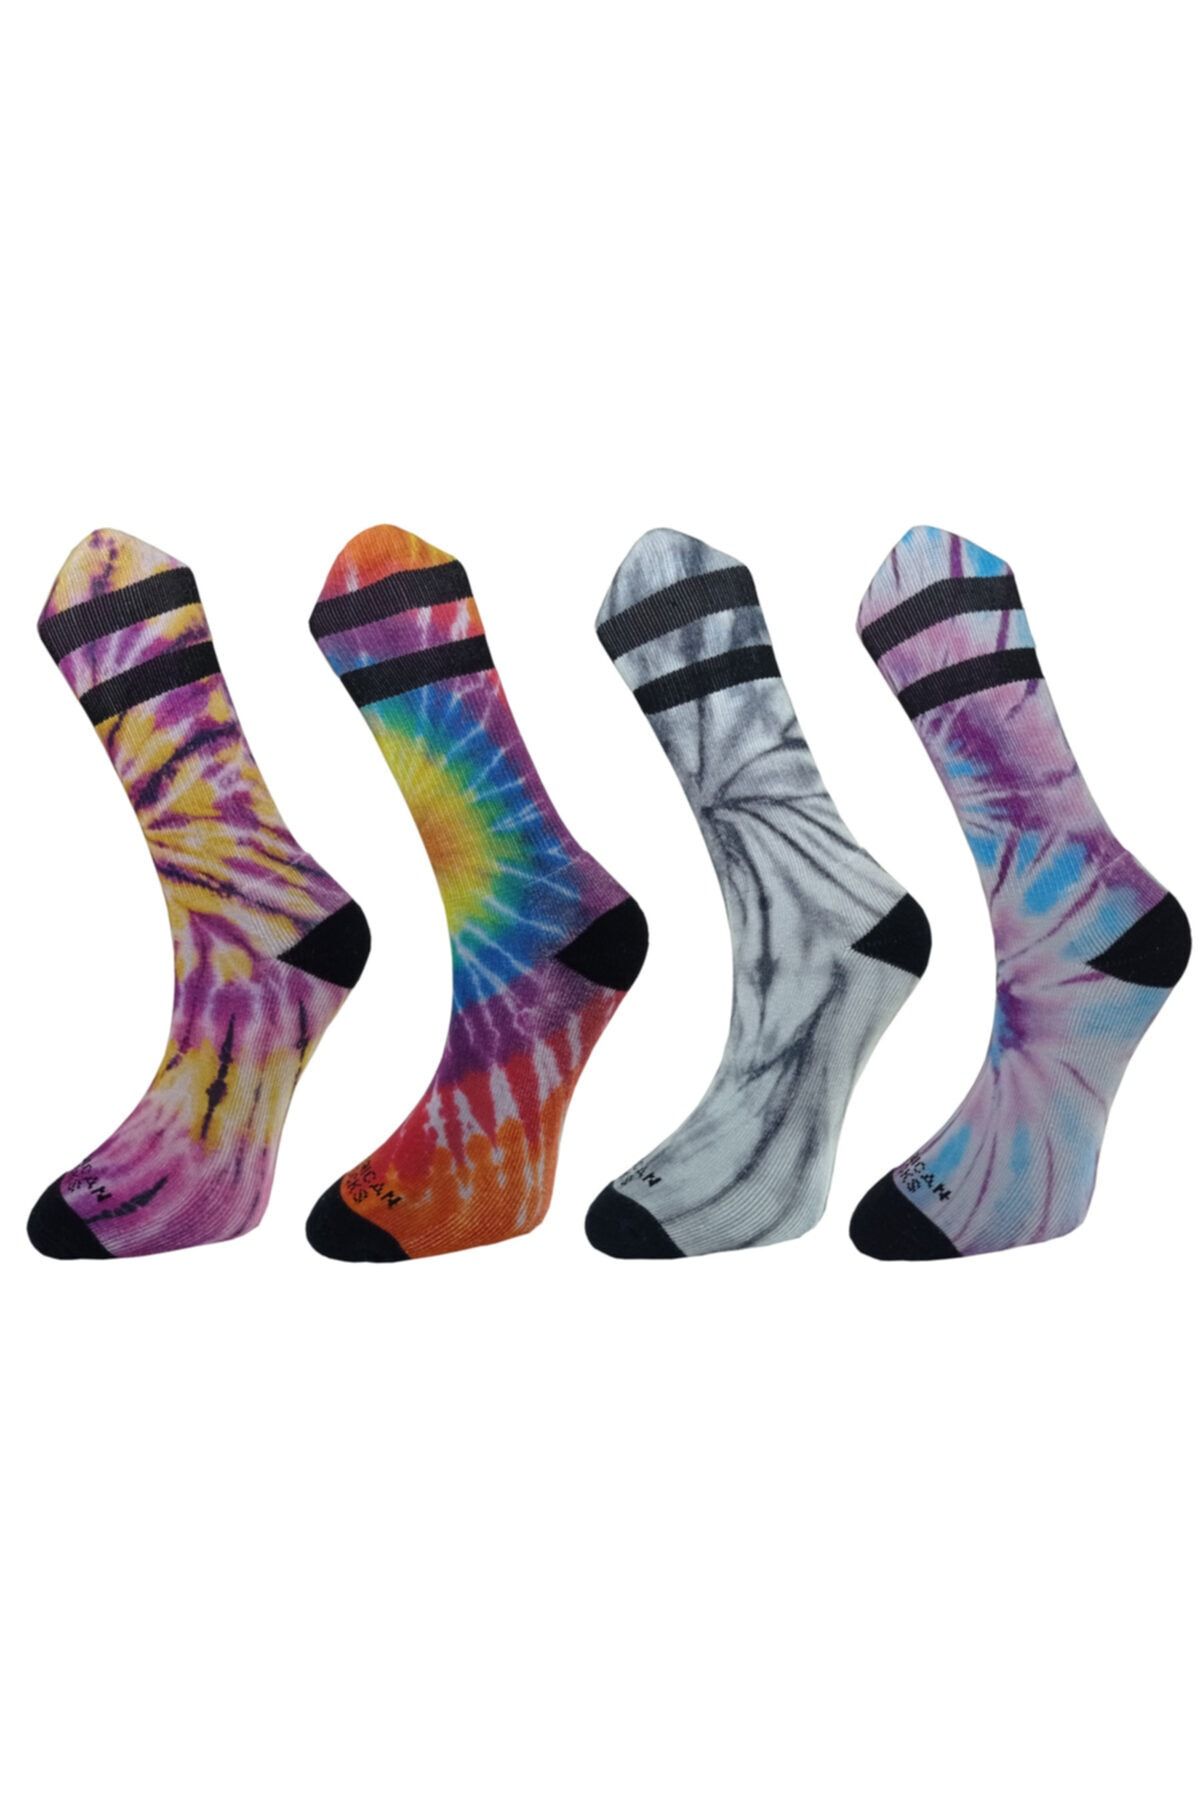 Mugan Unisex Spor Batik Çorap 4 Çift